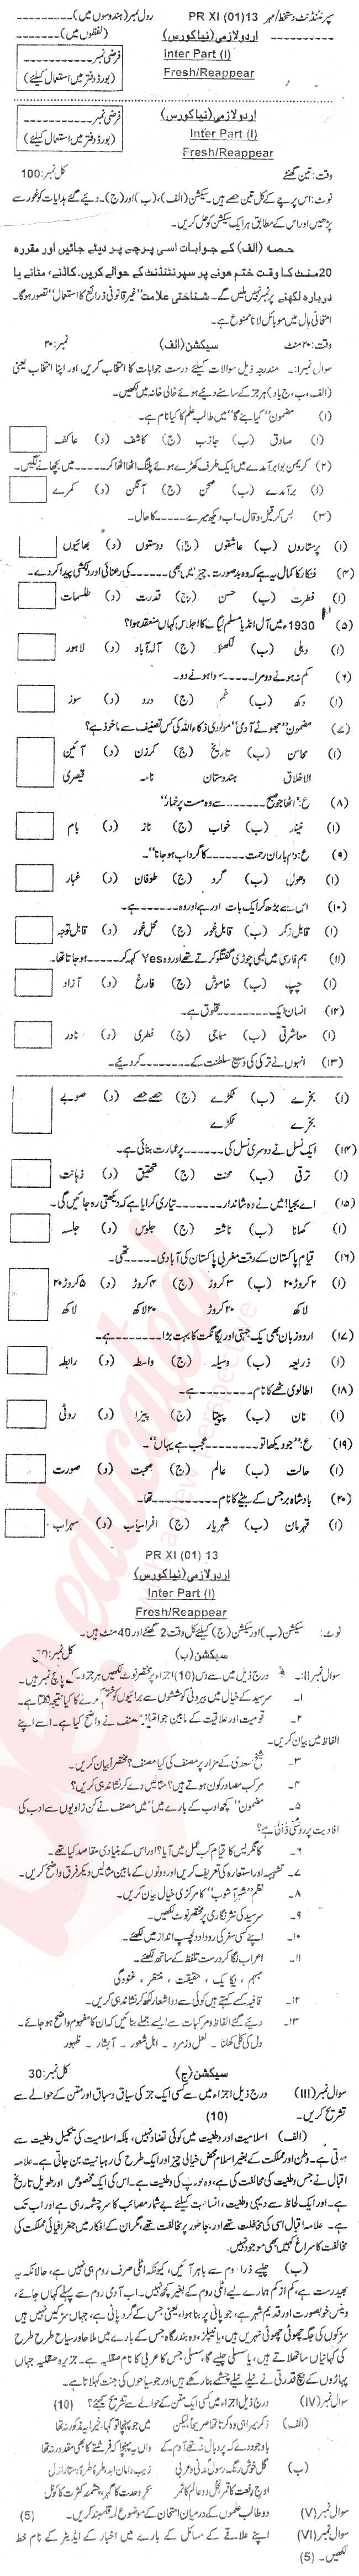 Urdu 11th class Past Paper Group 1 BISE Bannu 2013